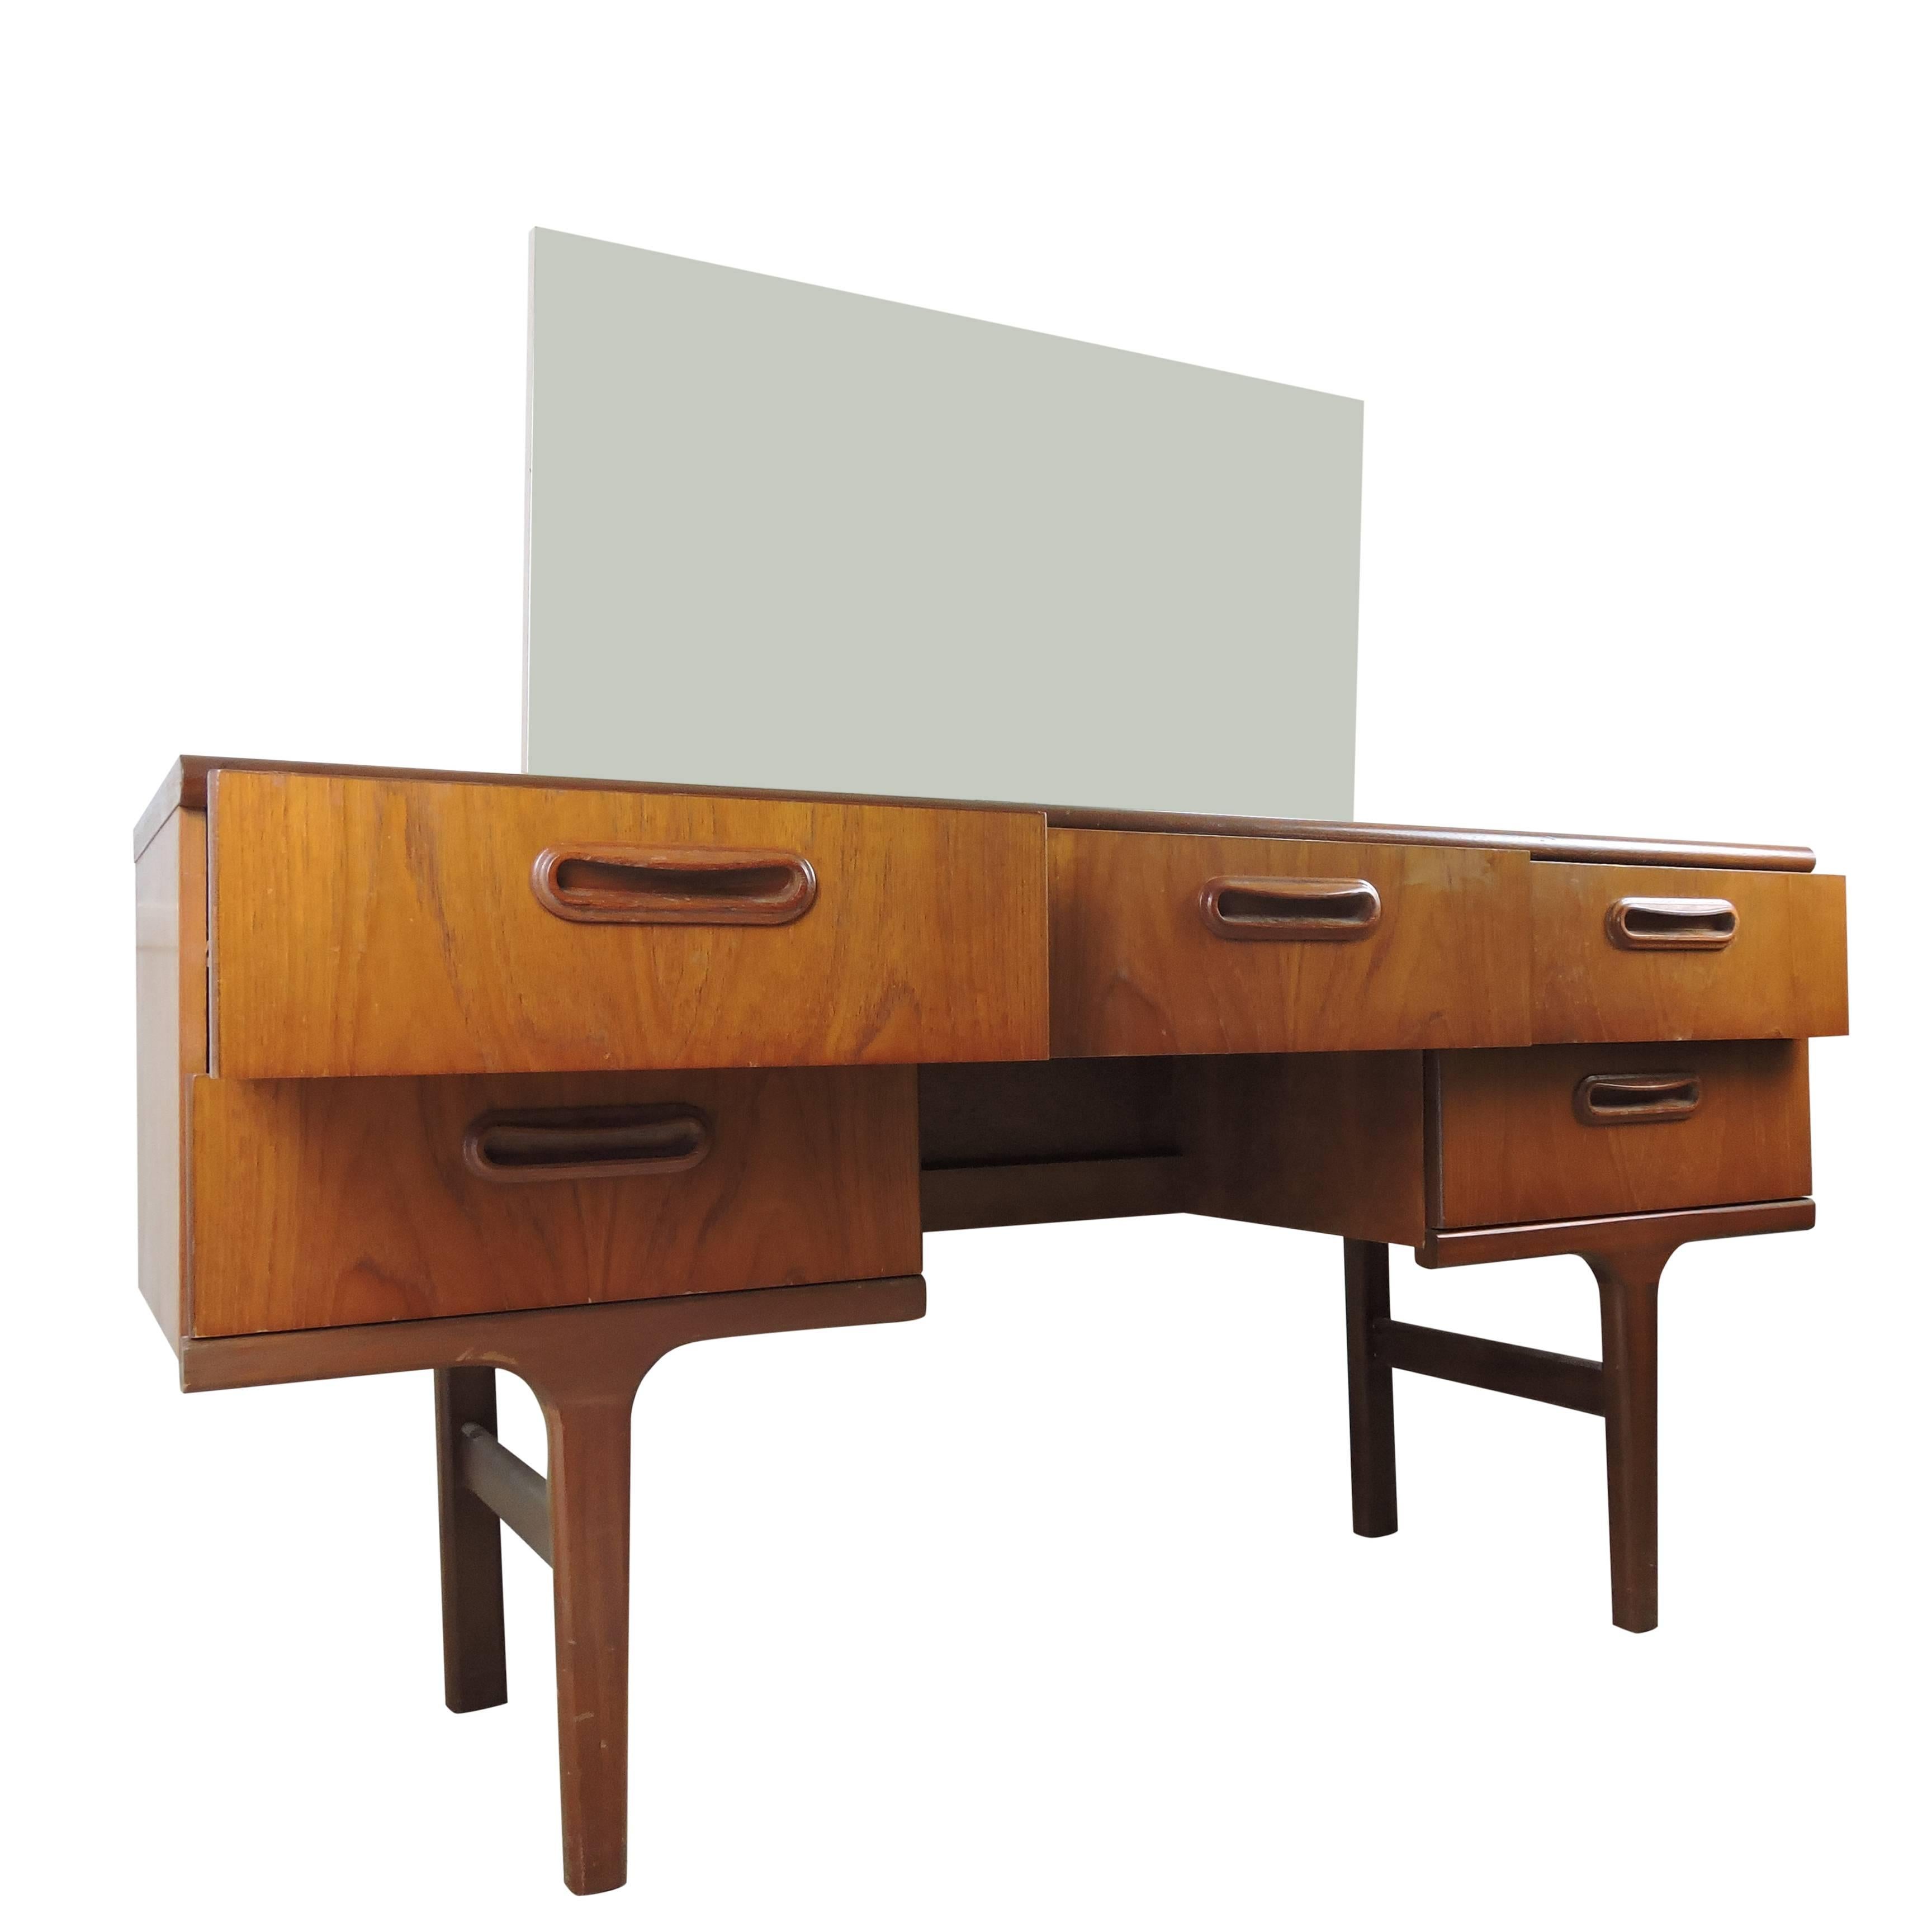 A Meredew teak 1960's dressing table or sideboard.